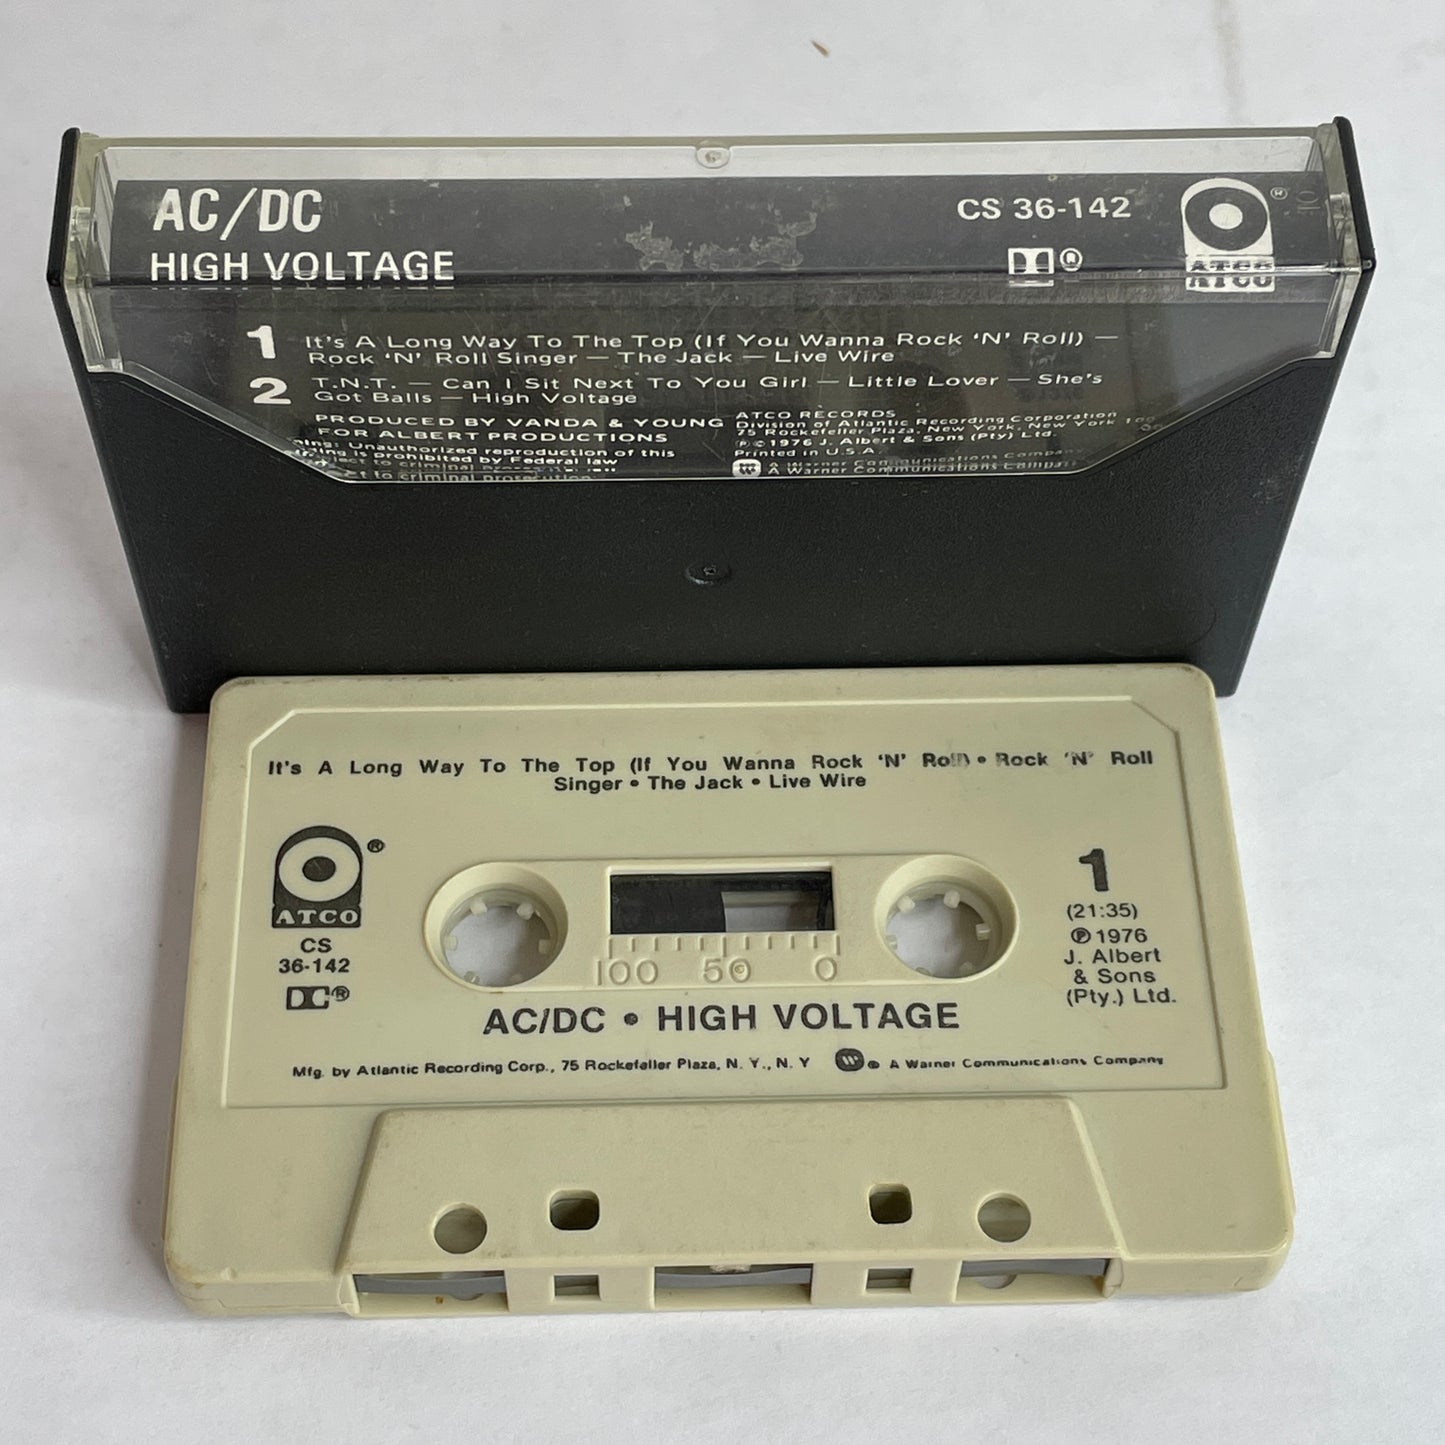 AC/DC - High Voltage original cassette tape